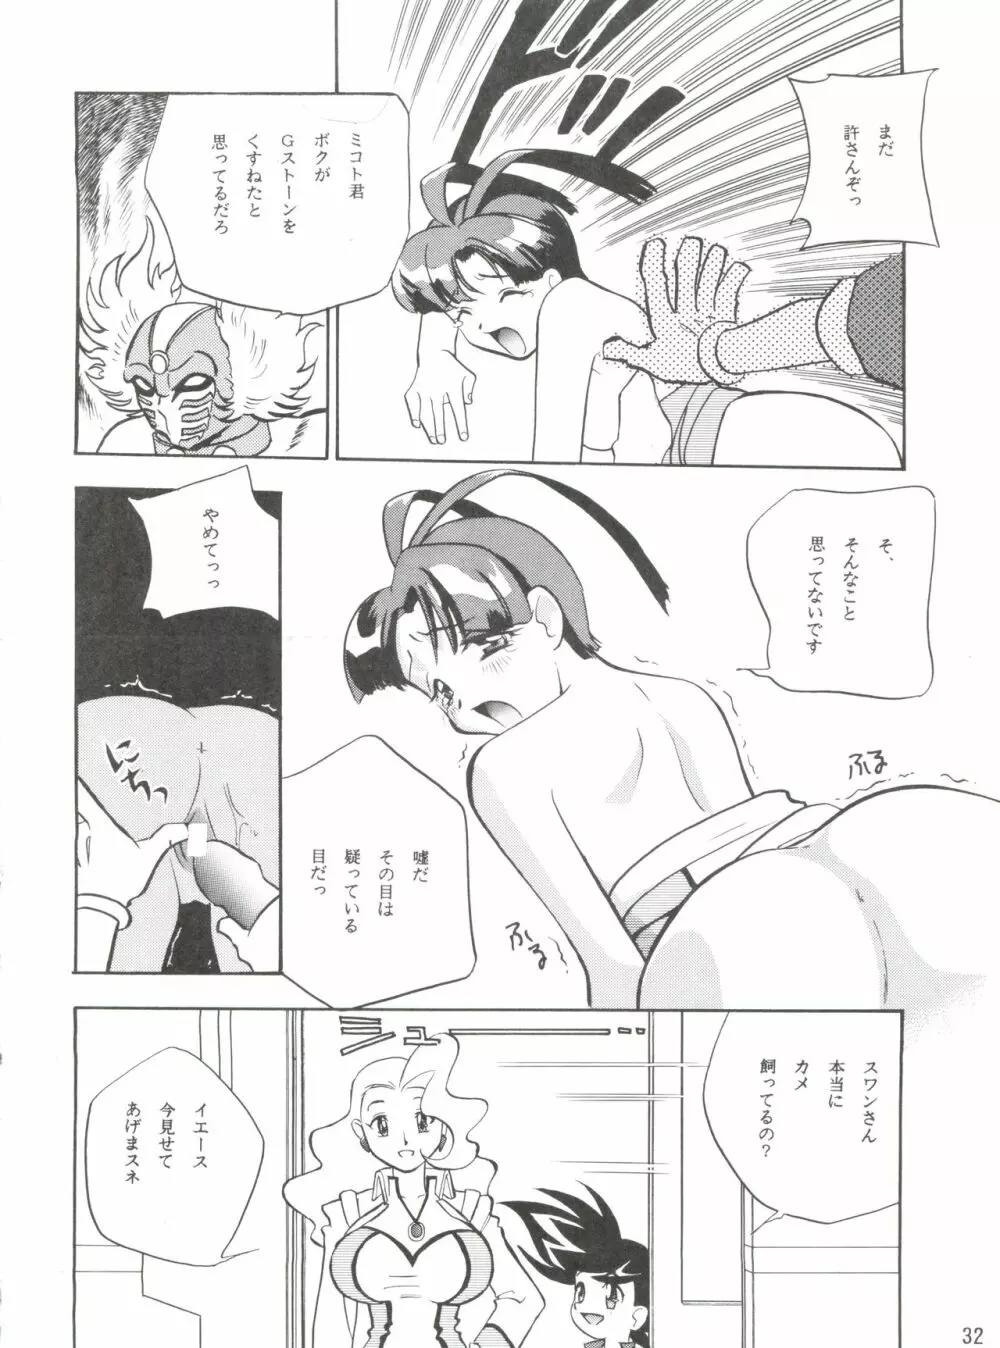 1997 WINTER 電撃犬王 - page33